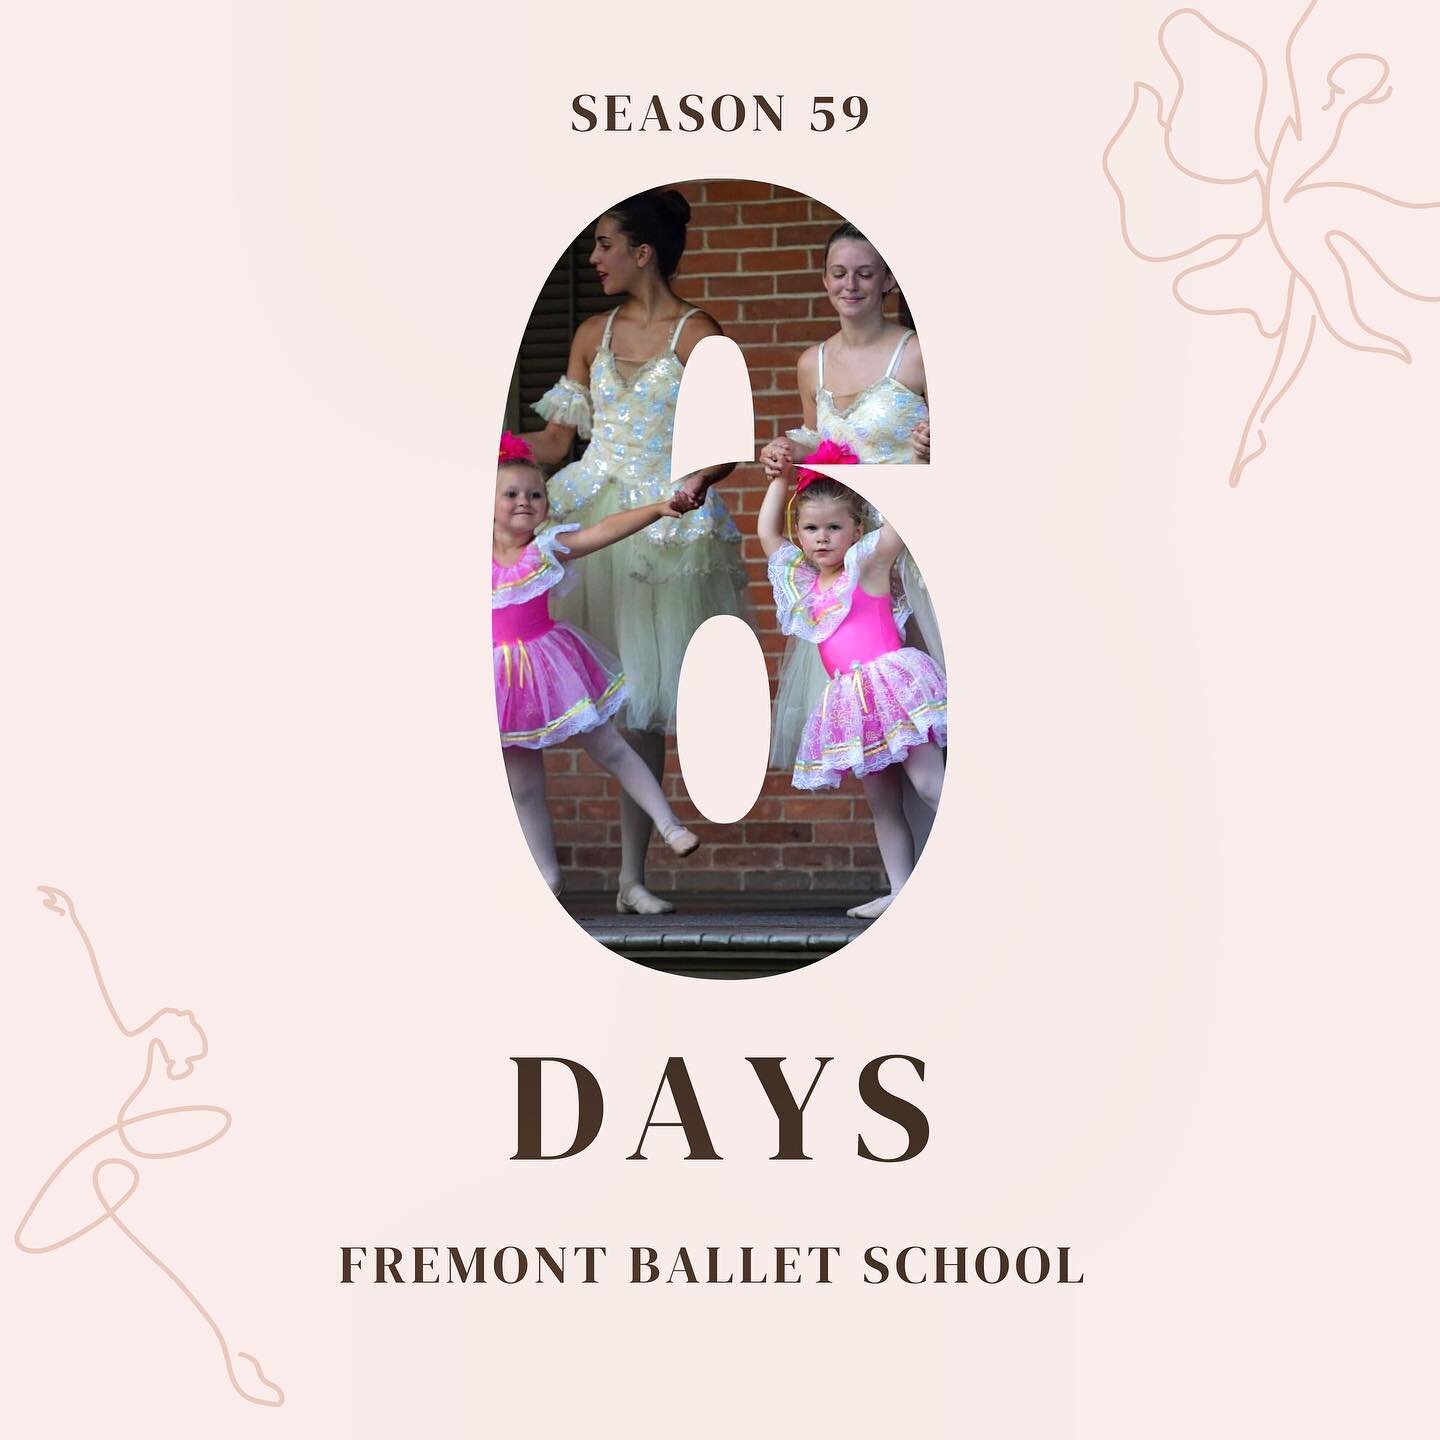 ✨ Less than a week until season 59! 6️⃣ days on the countdown until we&rsquo;re dancing together again!

#FremontBalletSchool #FremontOhio #FremontOhioDance #OhioDance #Ohio #Ballet